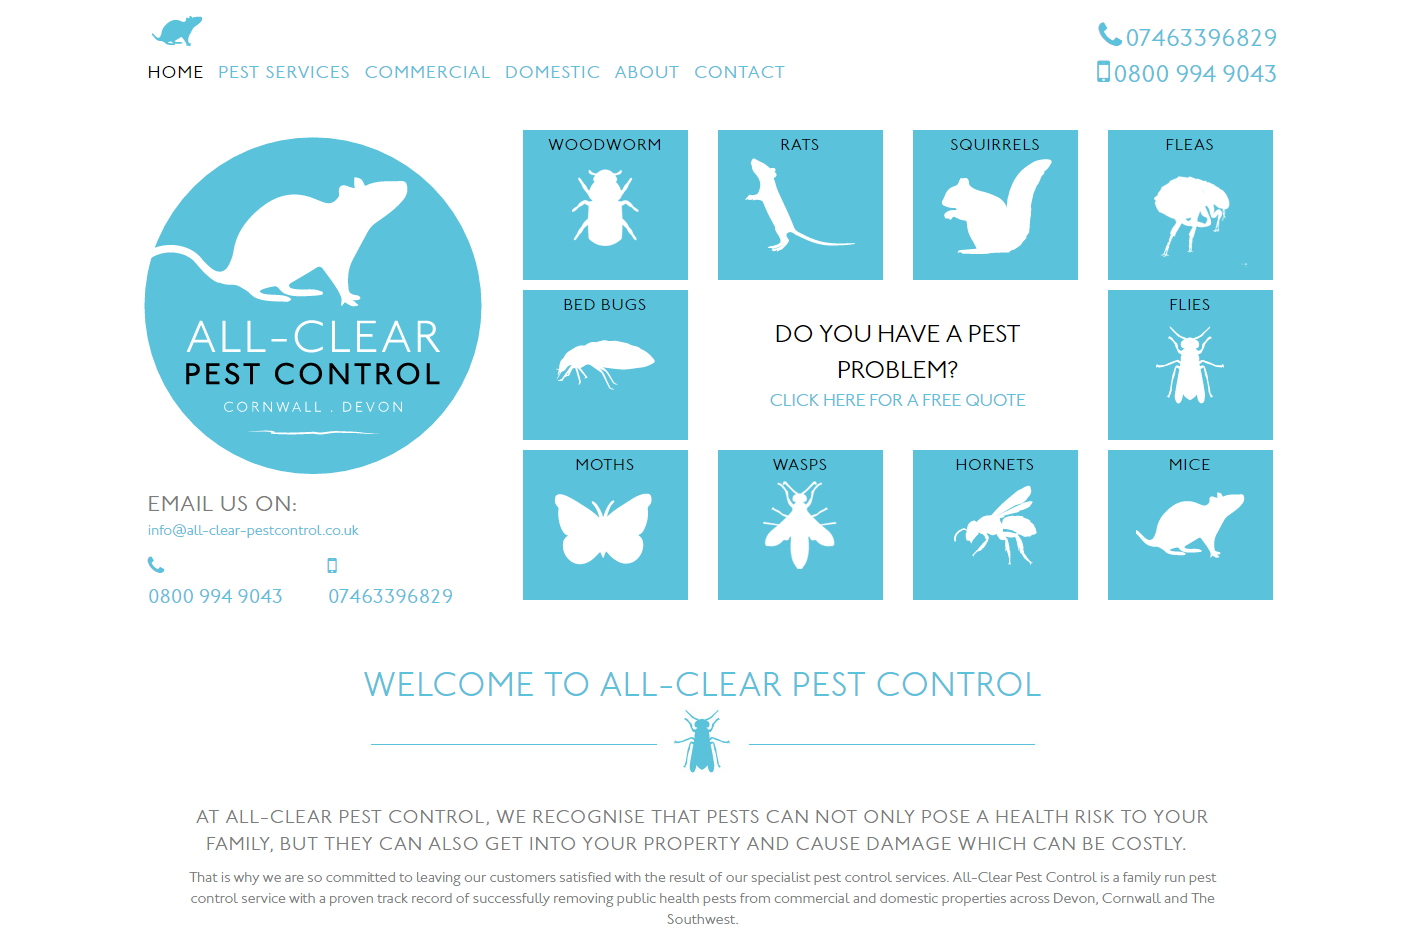 (c) All-clear-pestcontrol.co.uk